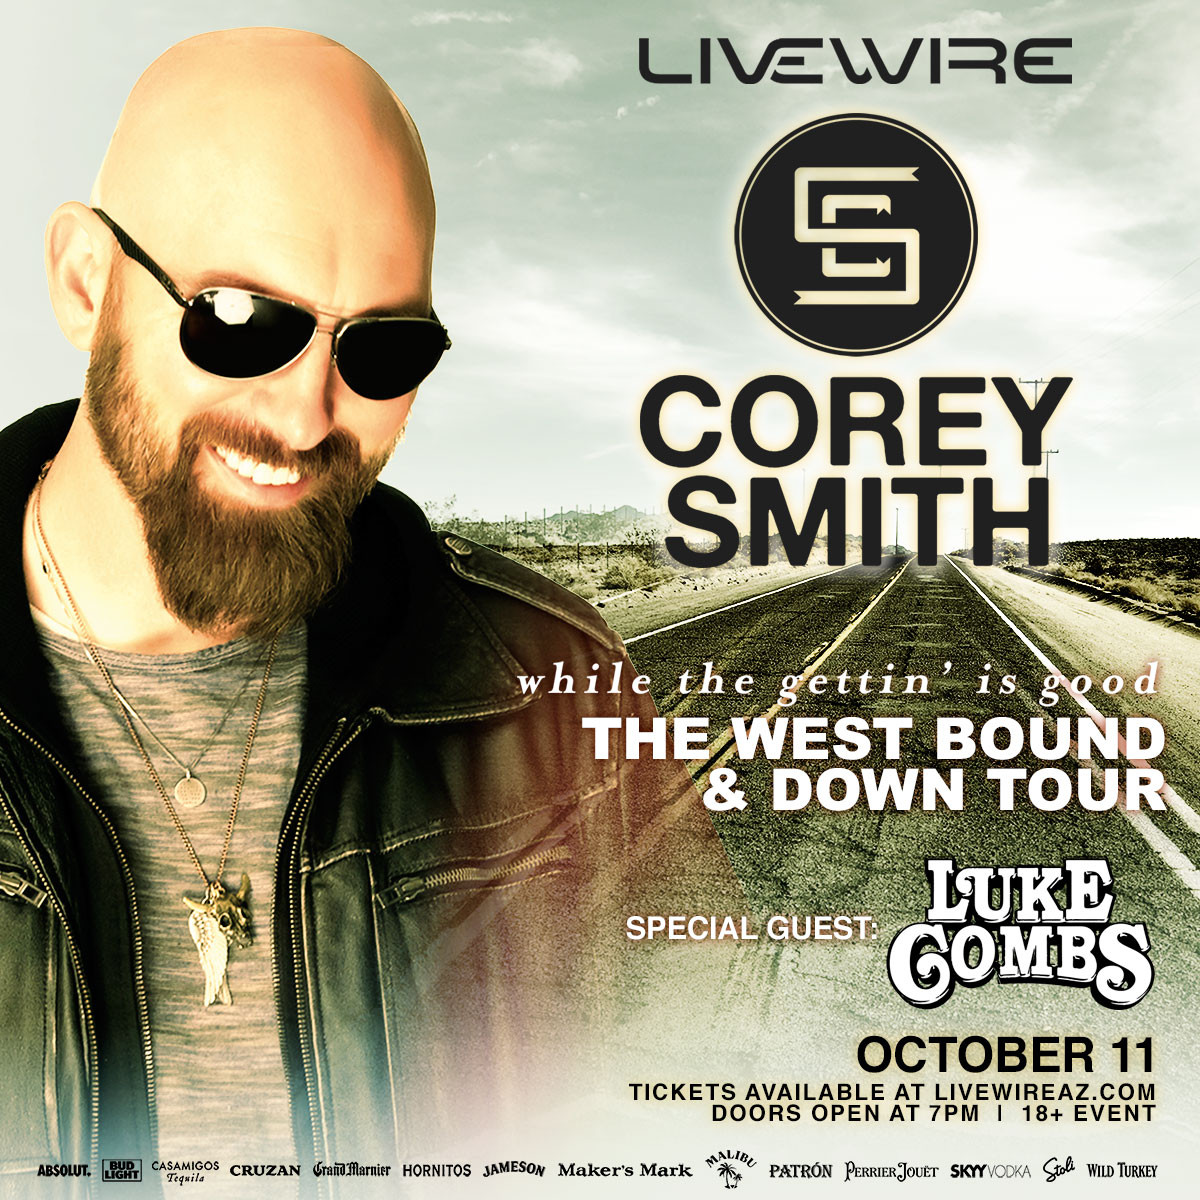 Corey Smith & Luke Combs Tickets 10/11/16